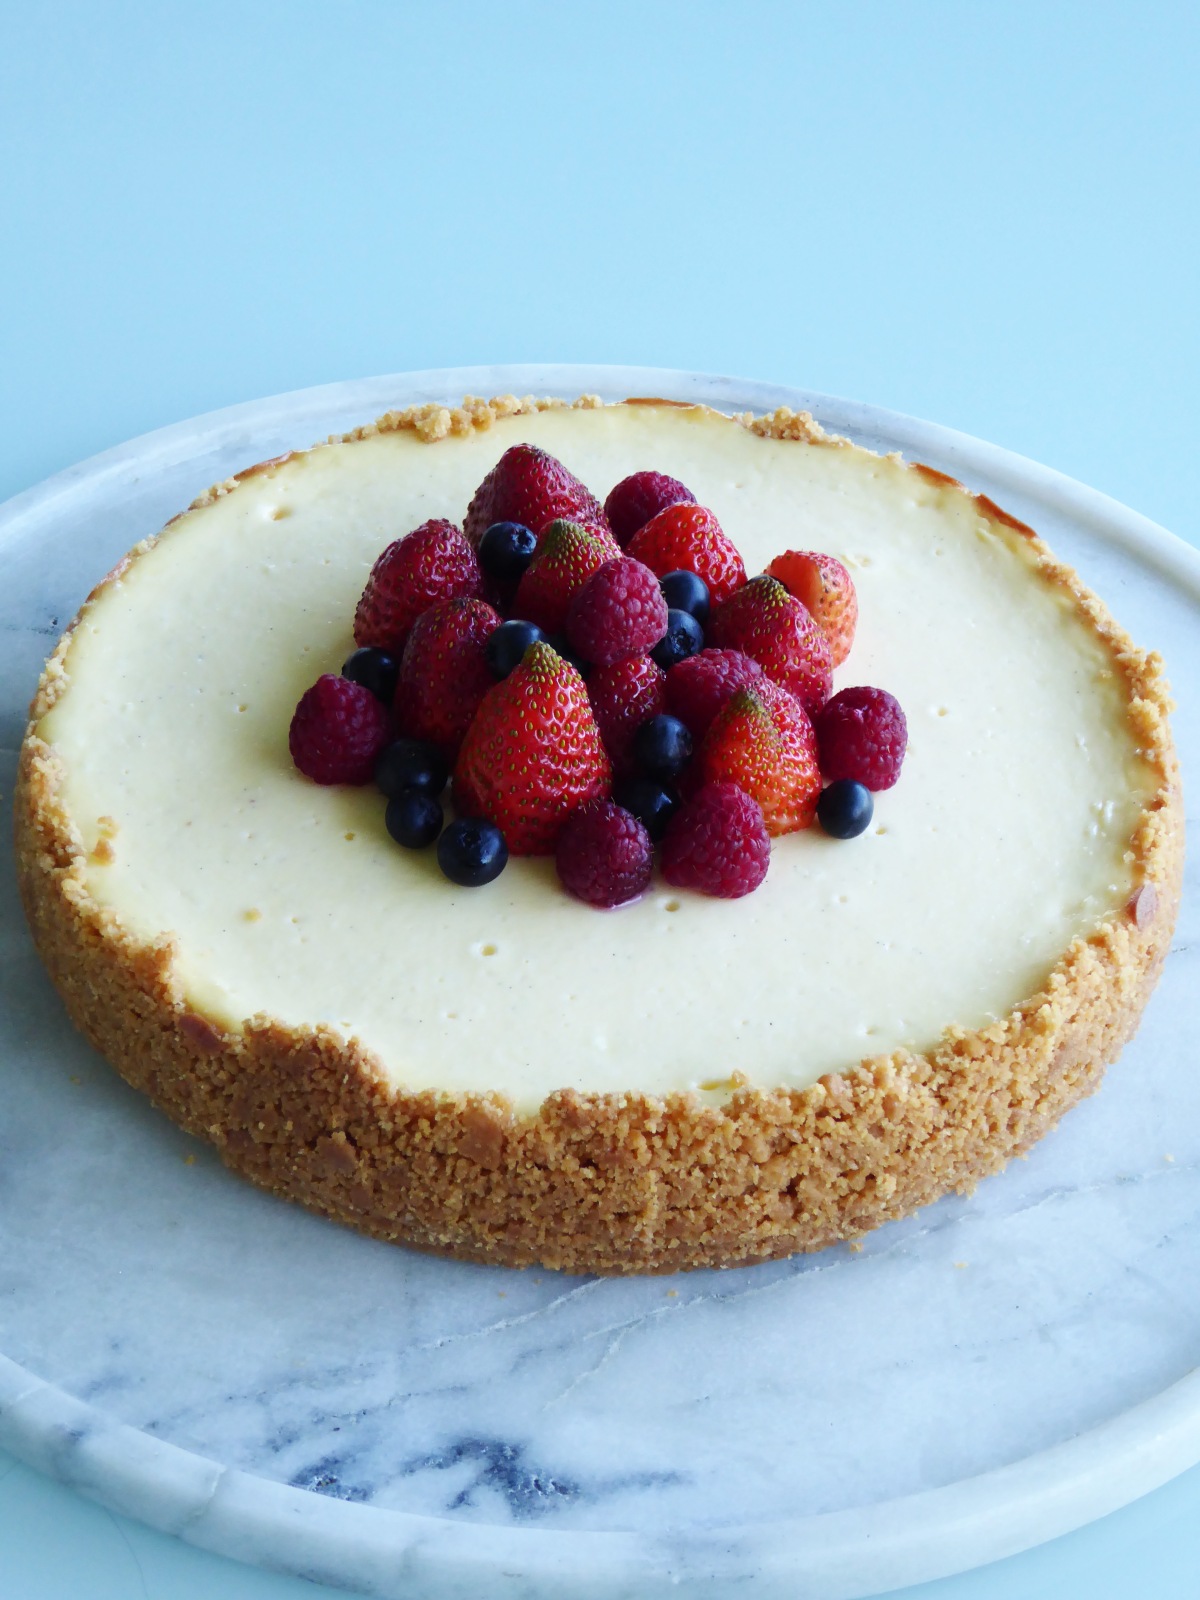 Baked cheesecake 4.jpg